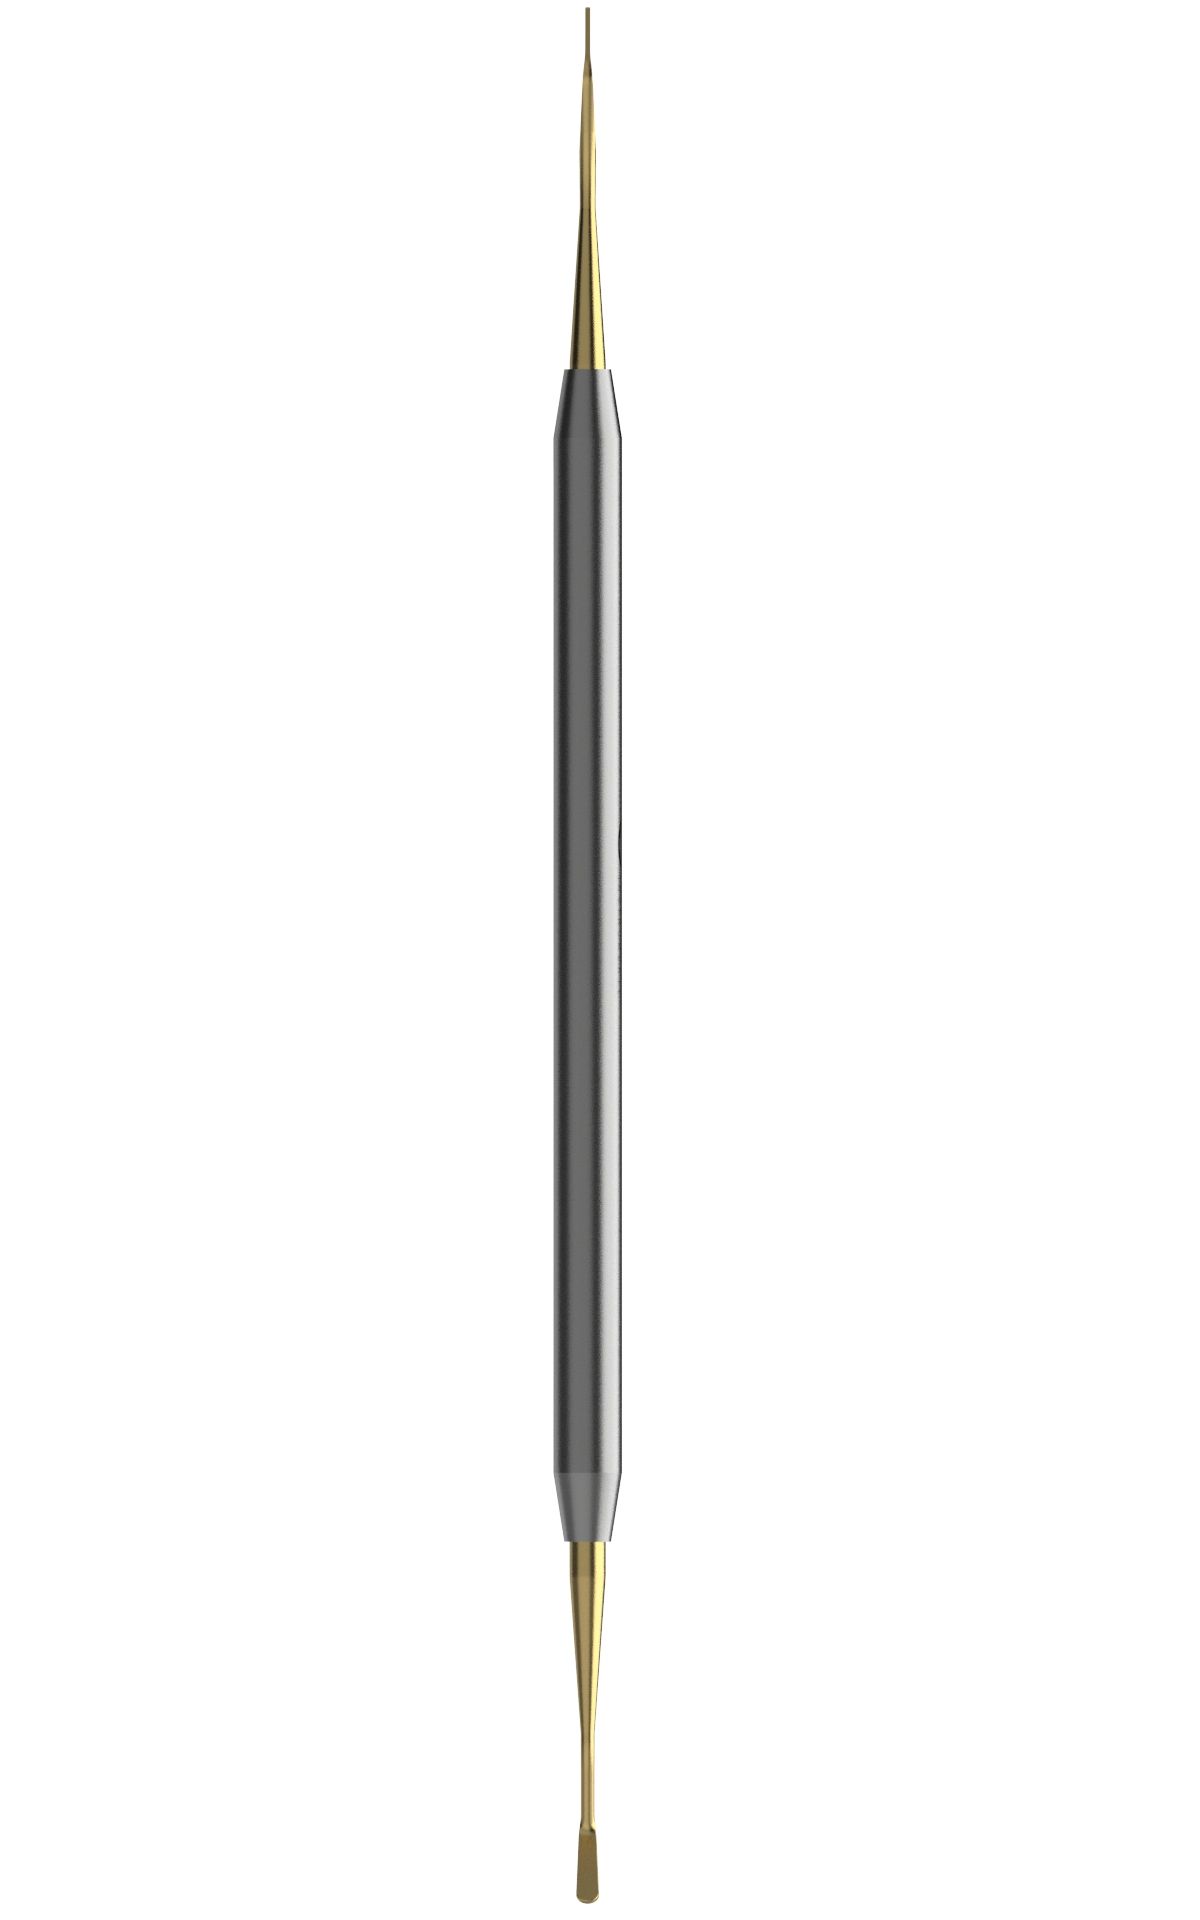 3TN, Composite spatula, TN-coated